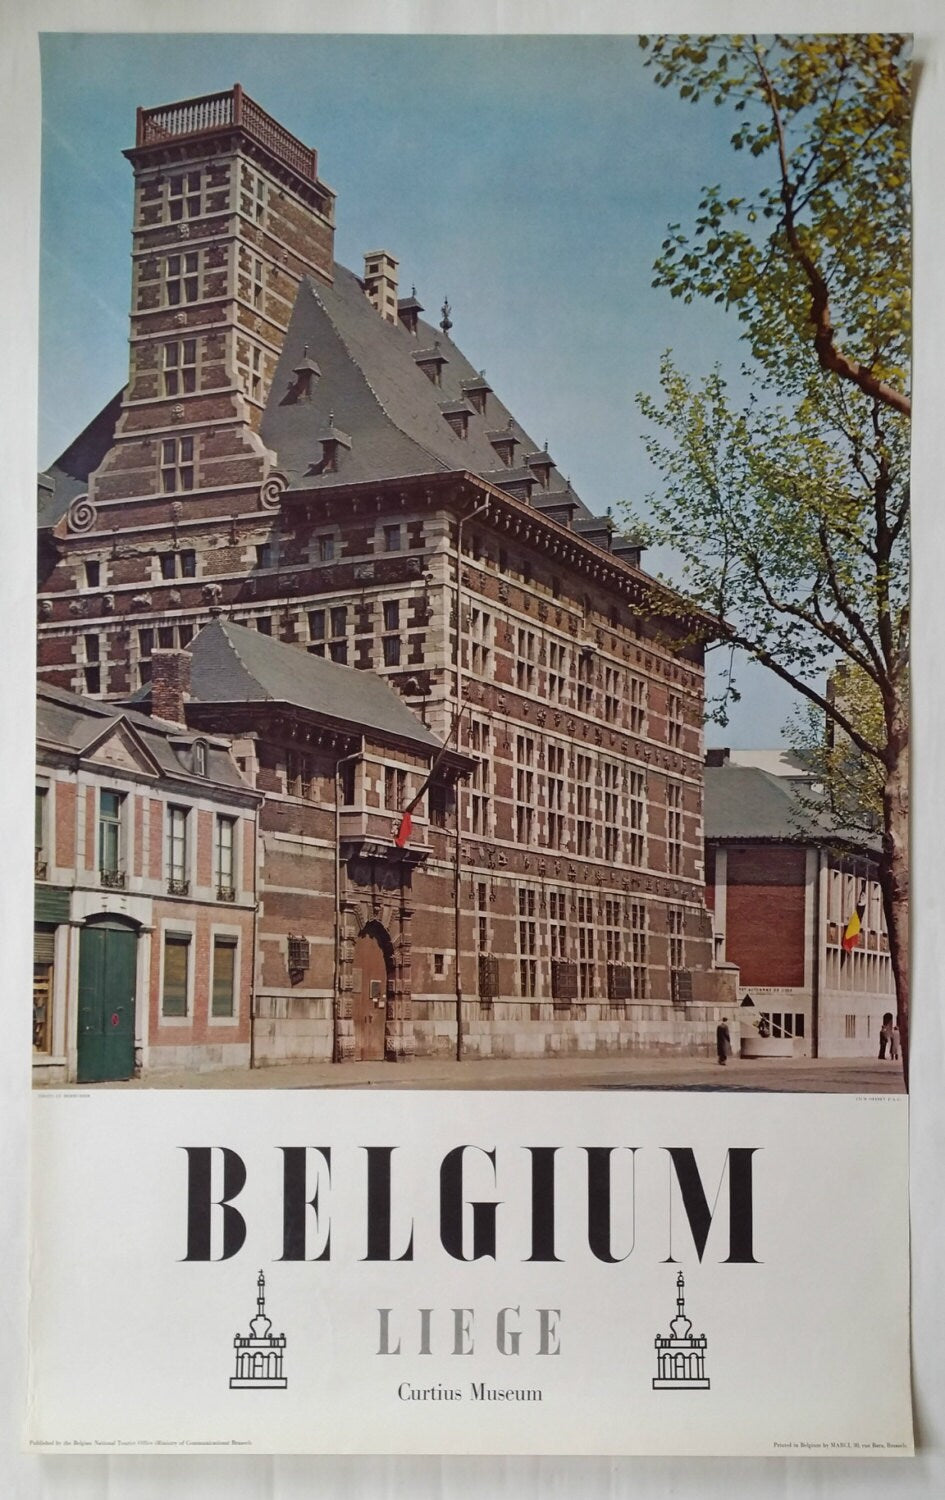 1950s Liège, Belgium Travel Poster - Original Vintage Poster